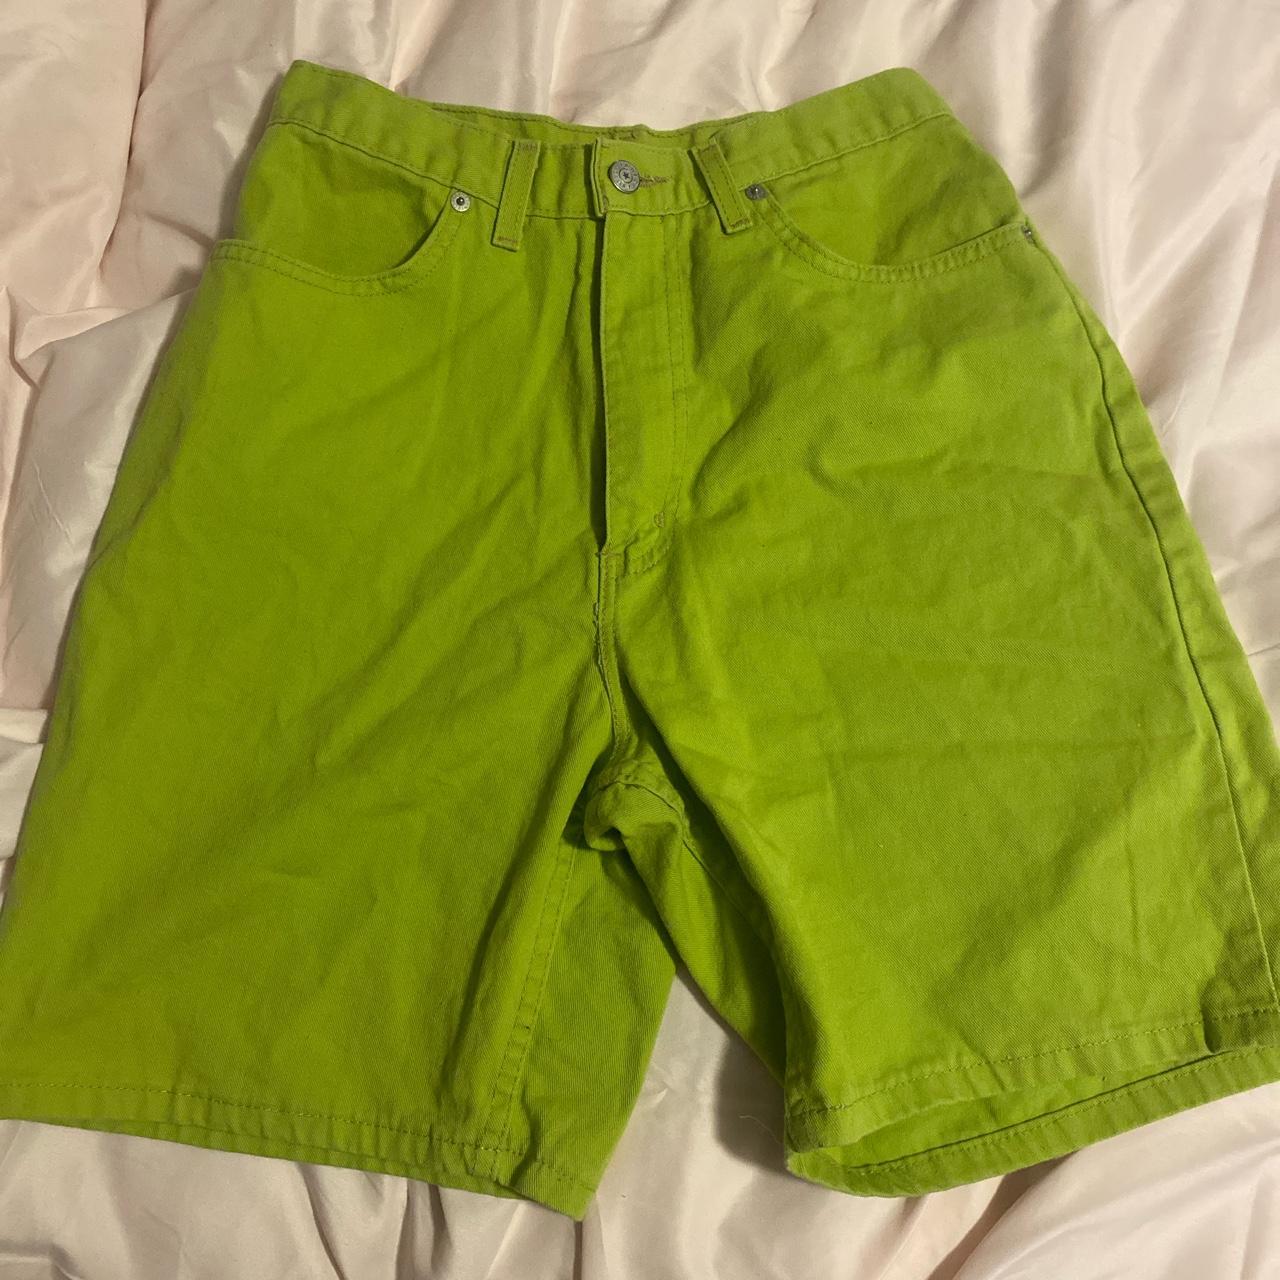 Sunzel shorts Accideny bought a size medium 😒 - Depop